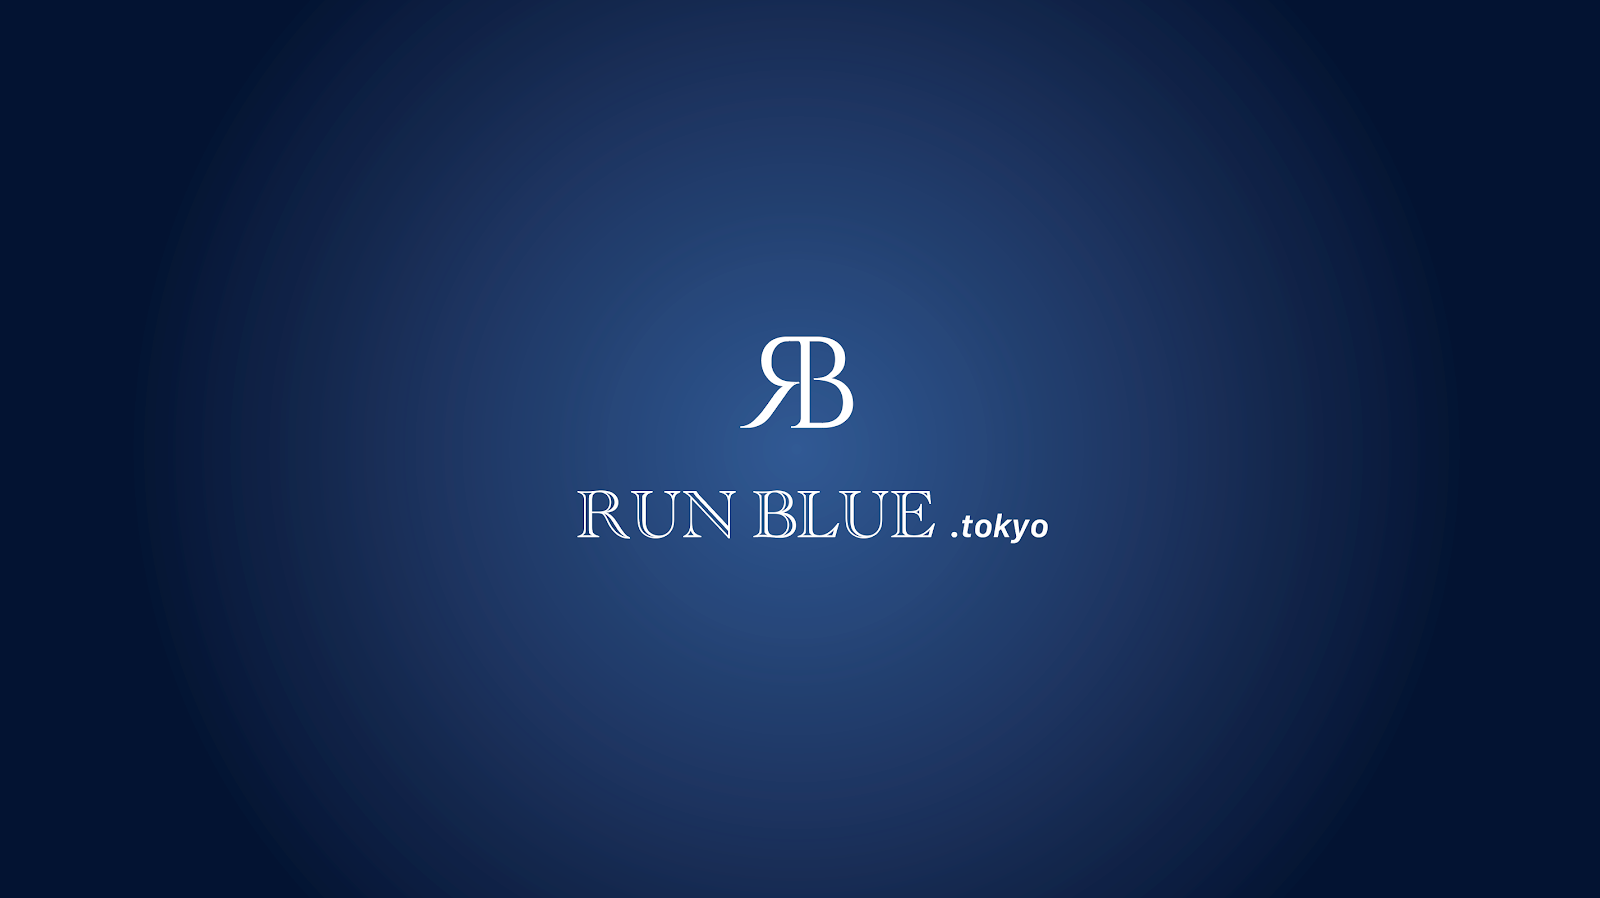 RUN BLUE tokyoのイメージ